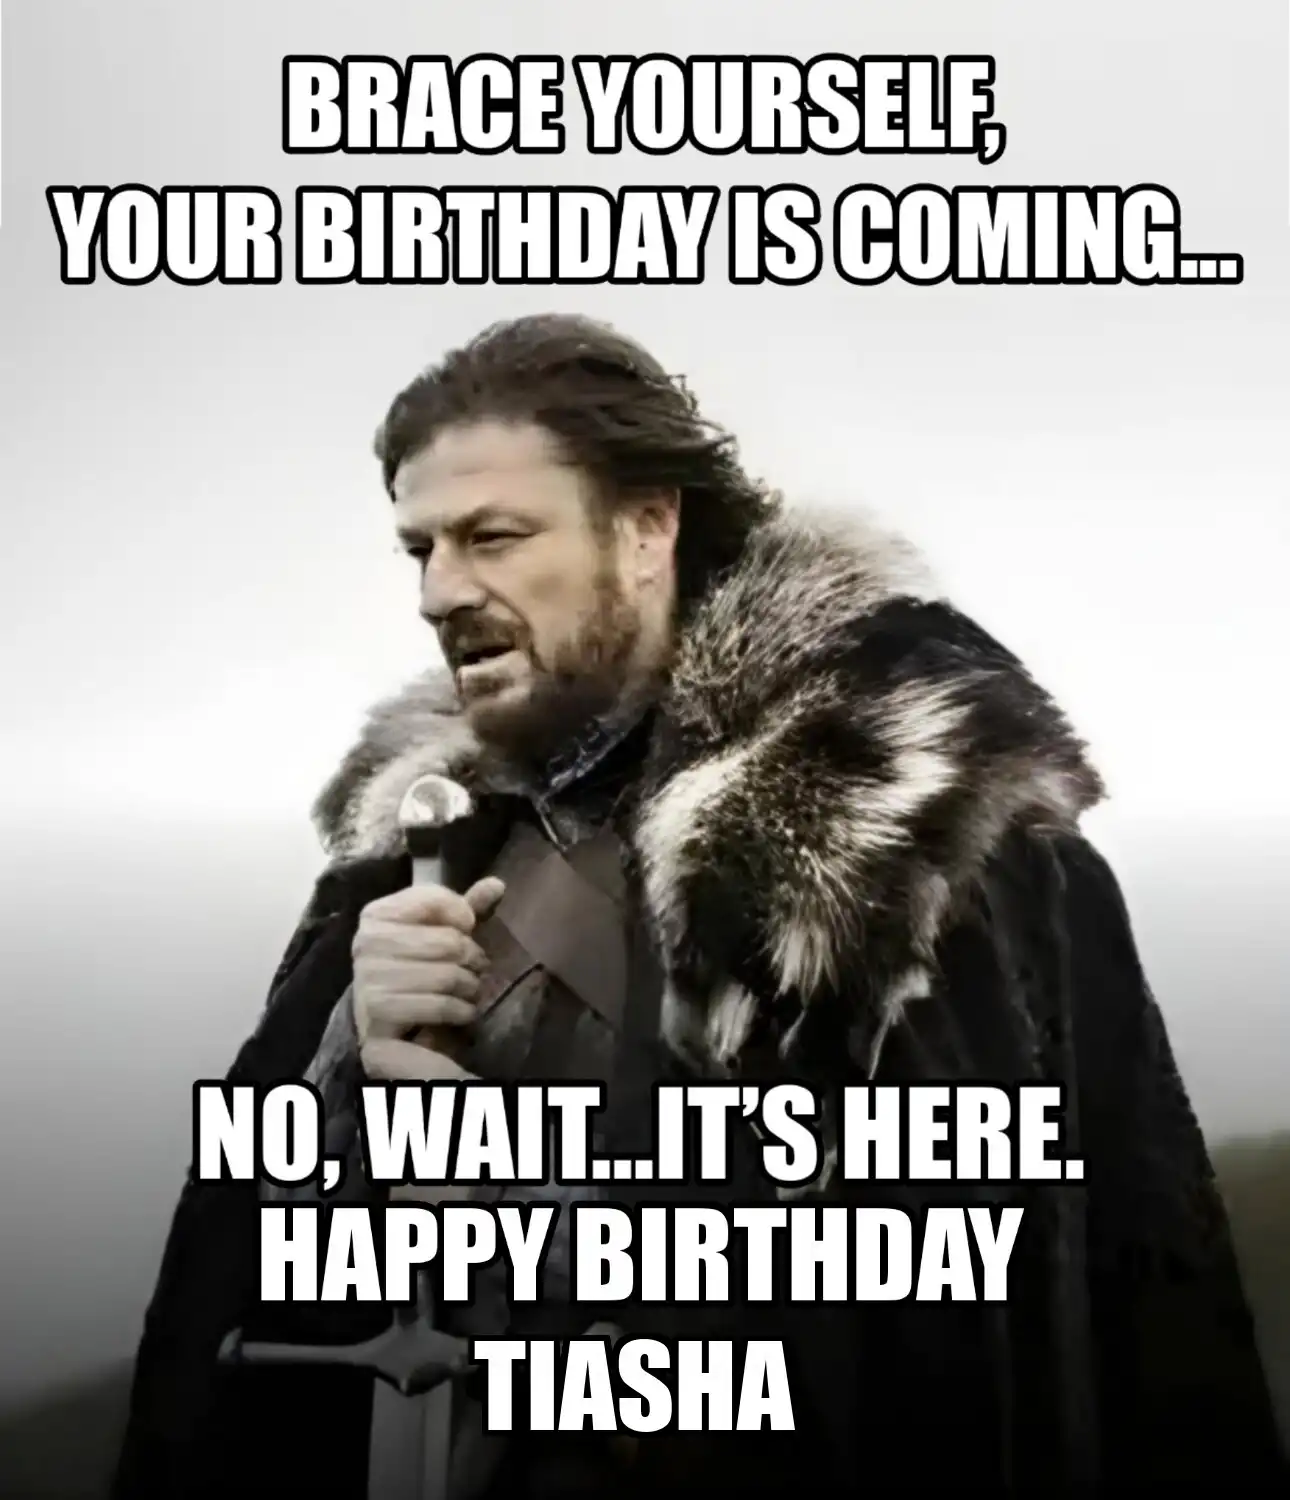 Happy Birthday Tiasha Brace Yourself Your Birthday Is Coming Meme